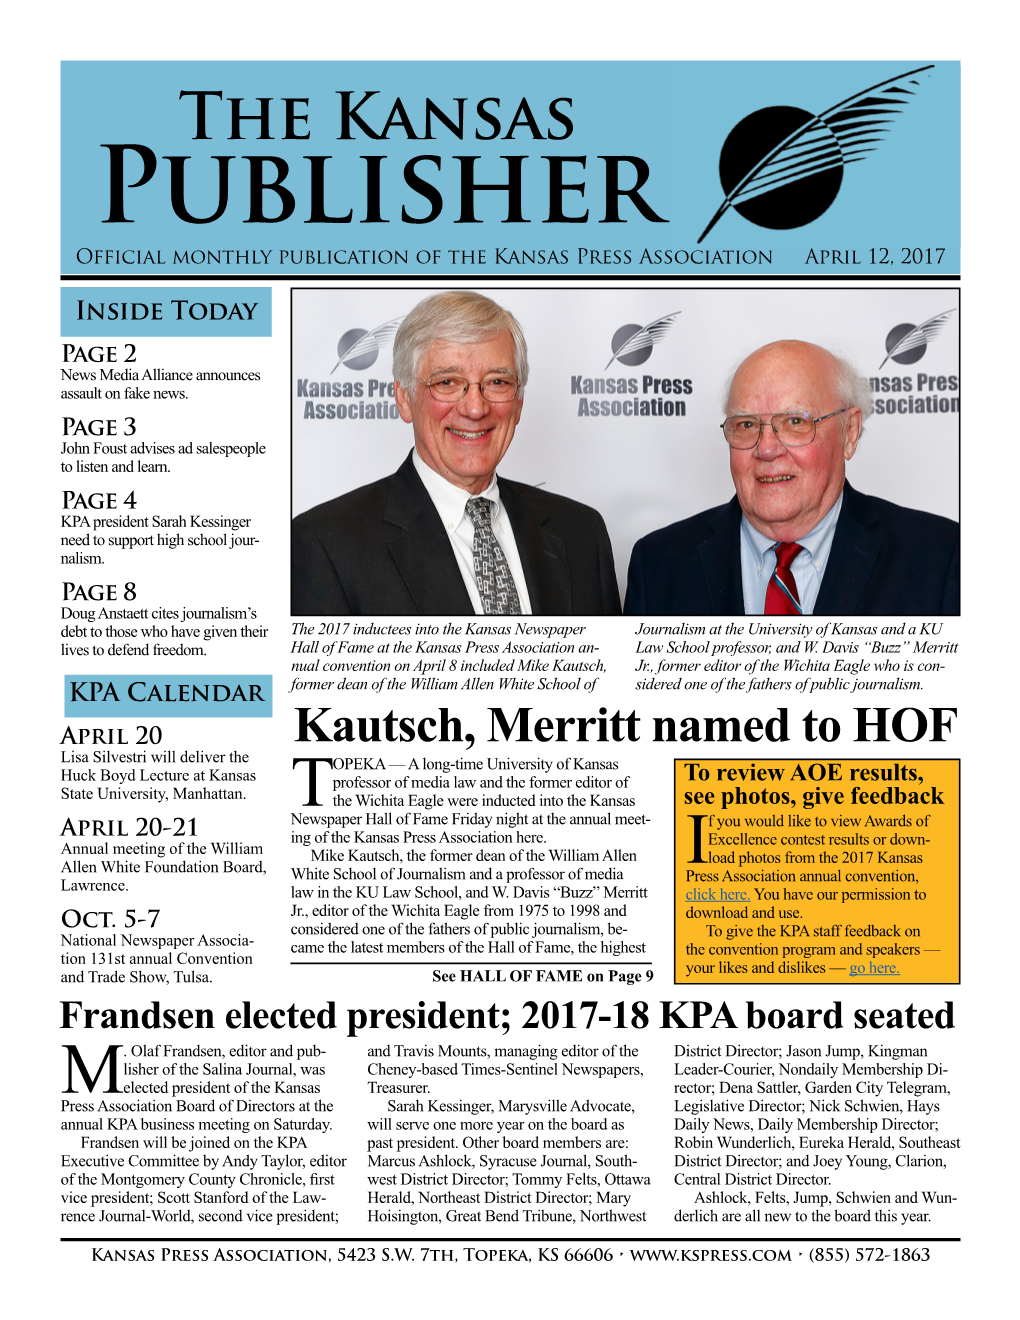 Kansas Publisher Official Monthly Publication of the Kansas Press Association April 12, 2017